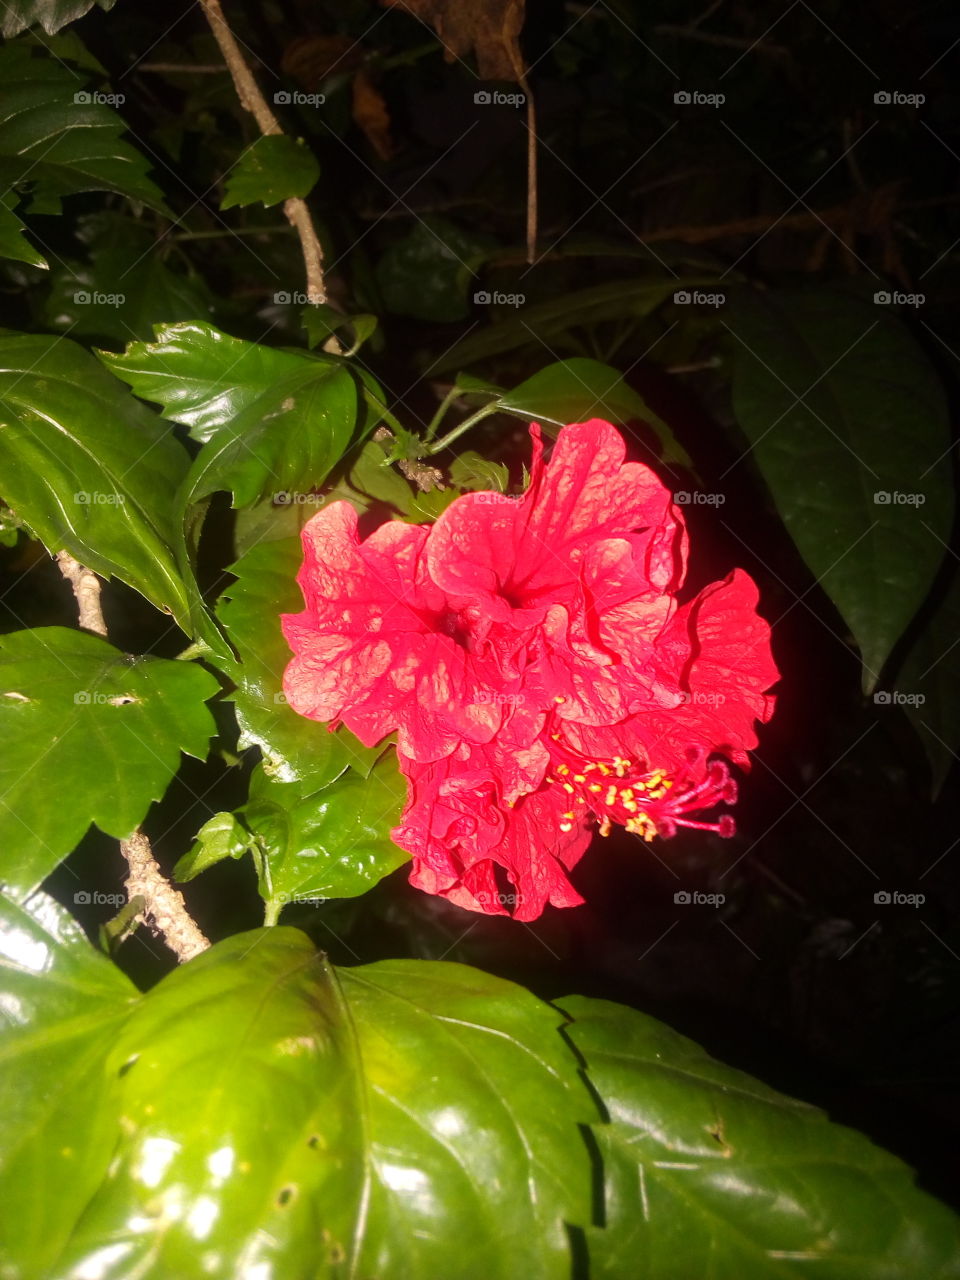 Hibiscus flower in night!